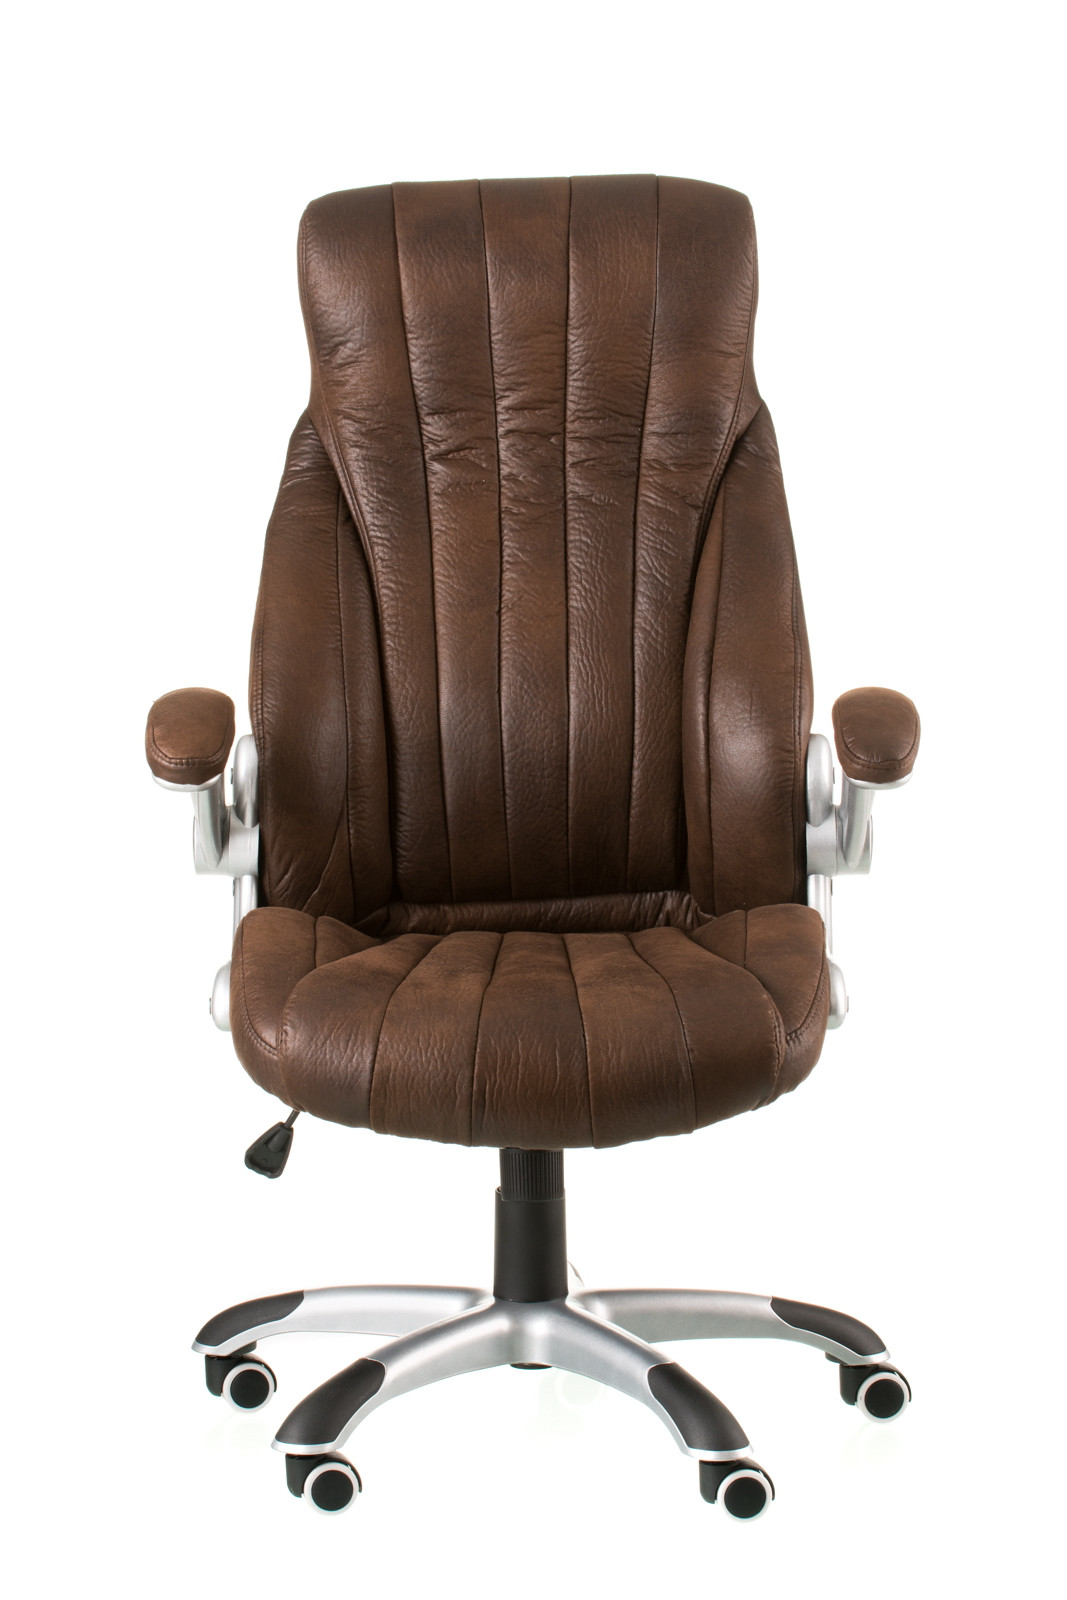 Кресло офисное TPRO- Conor dark brown E1564